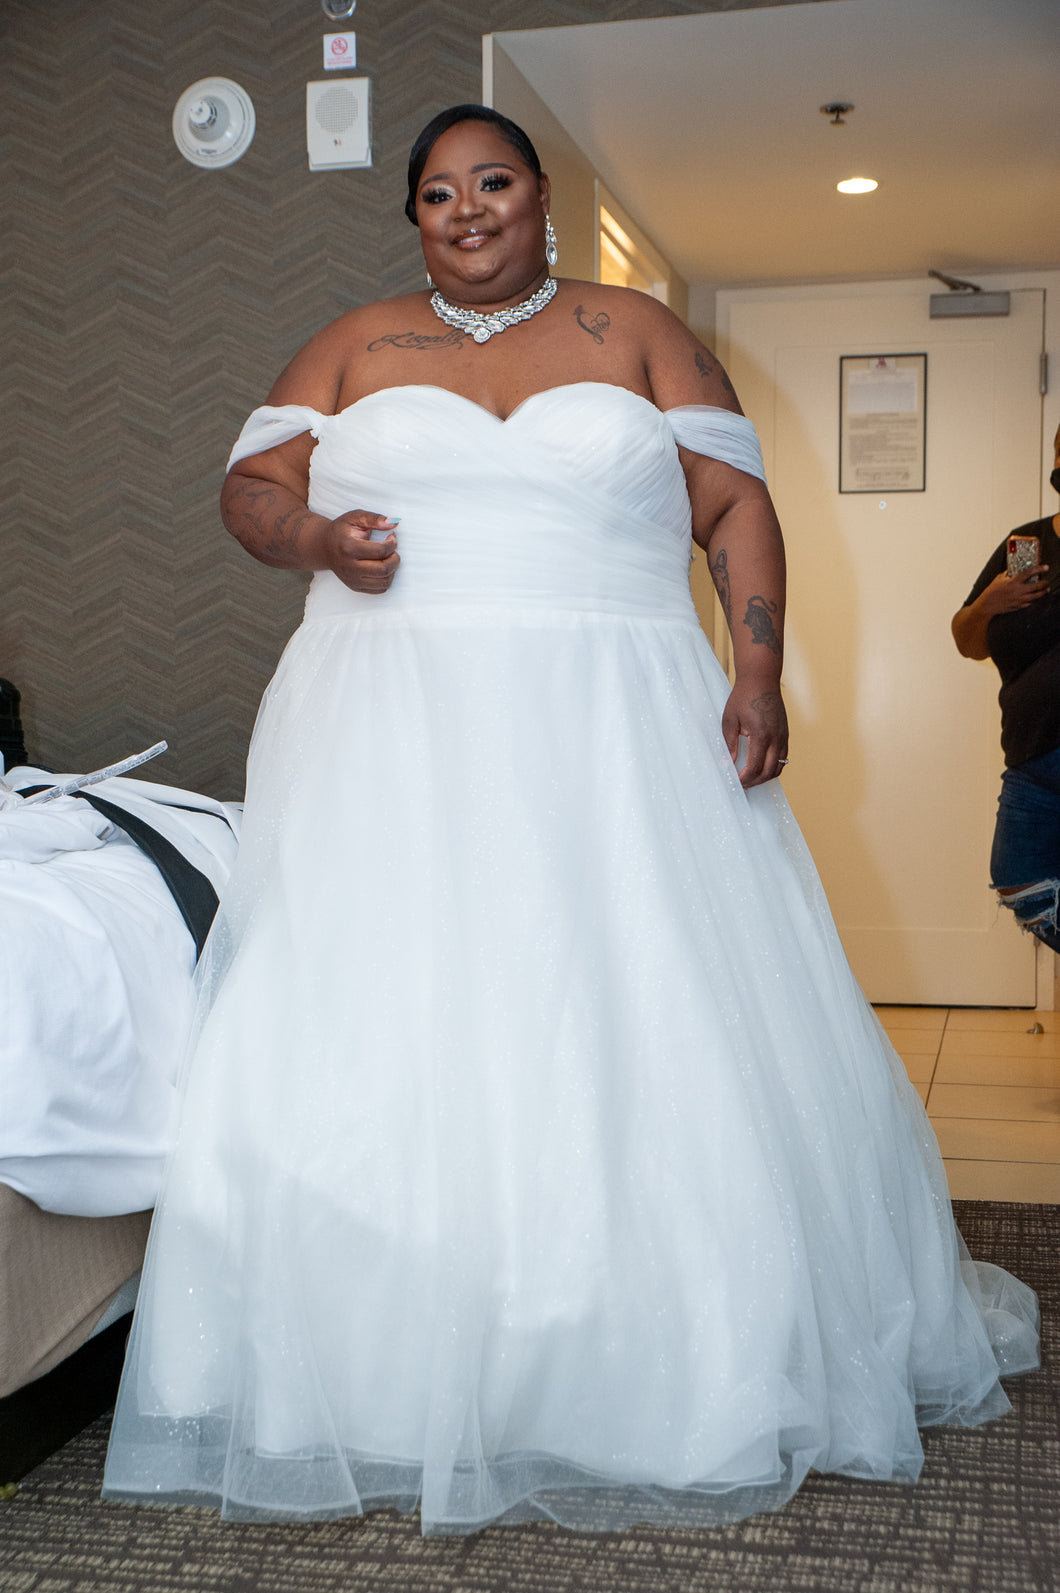 Morilee '3245' wedding dress size-32W PREOWNED